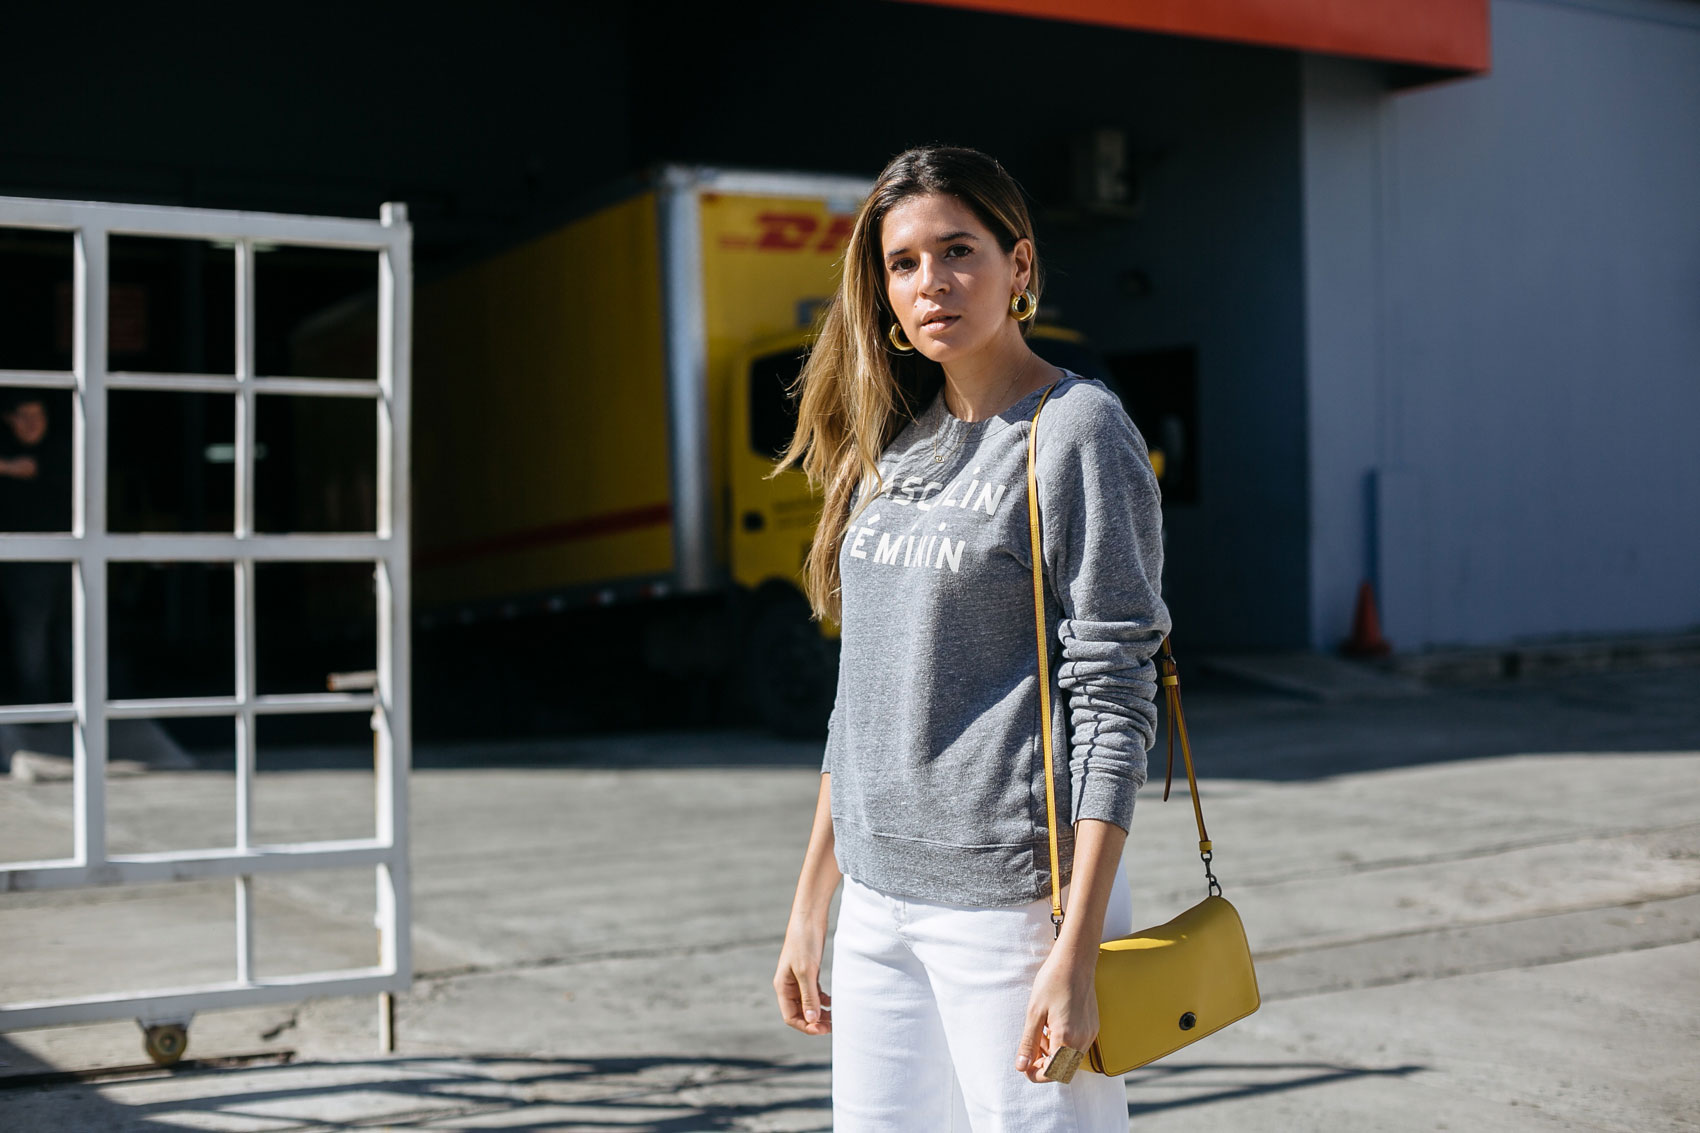 Maristella wearing a Clare V sweatshirt with Zara white denim and Coach bag